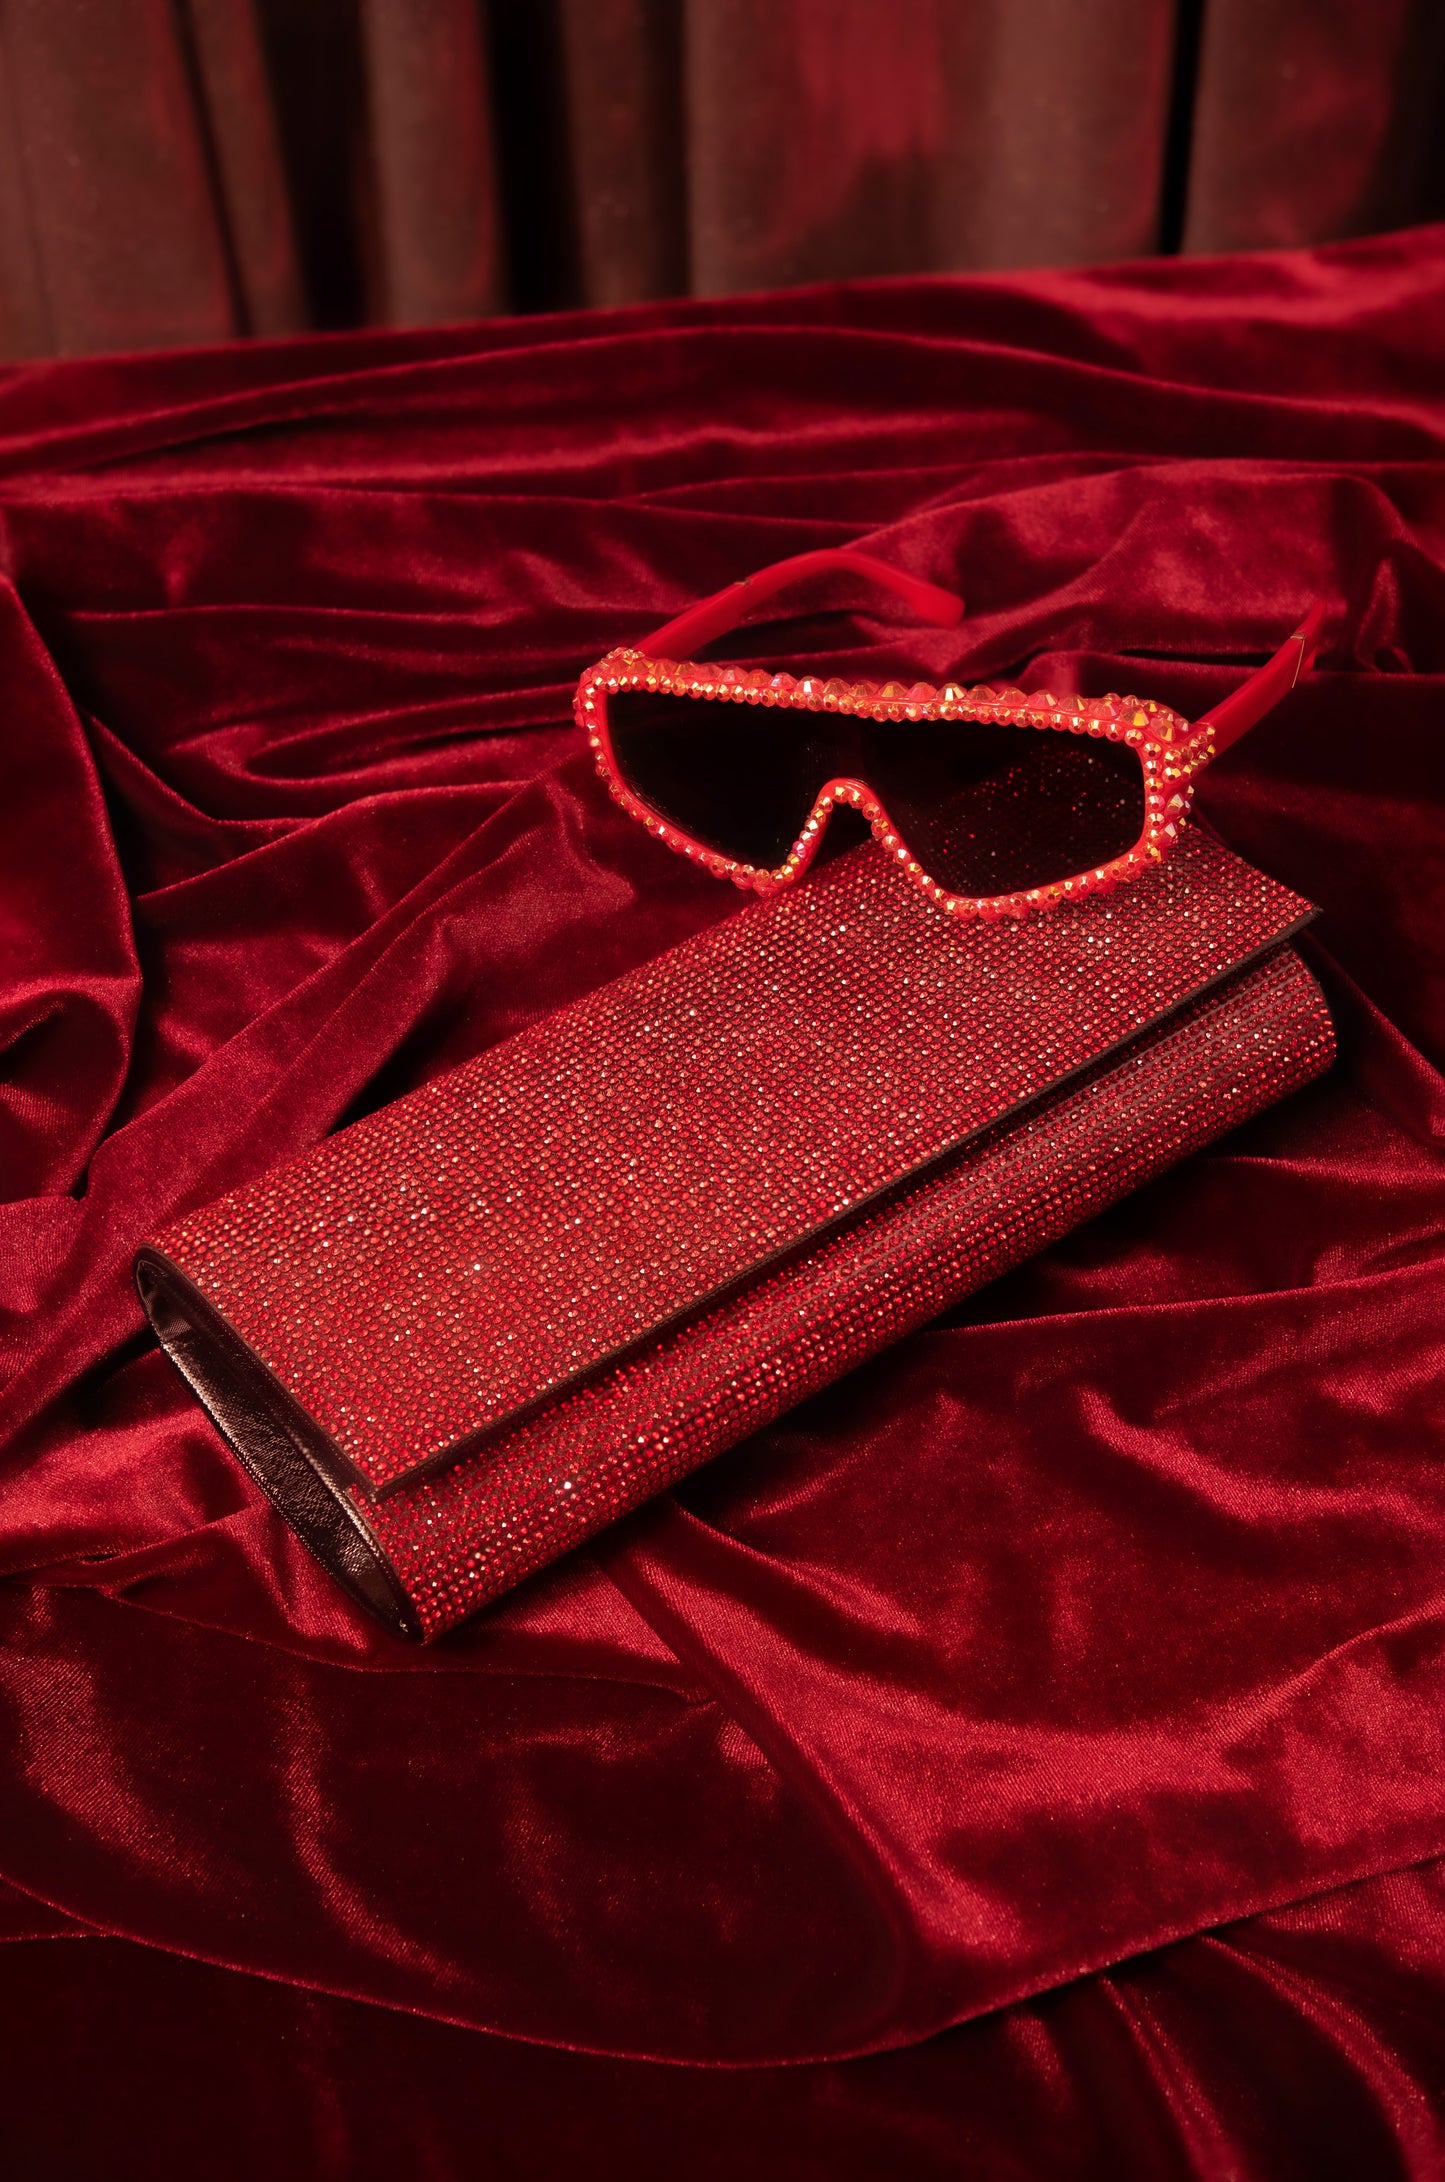 Rhinestone Embellished Clutch Evening Bag Purse - Black Red